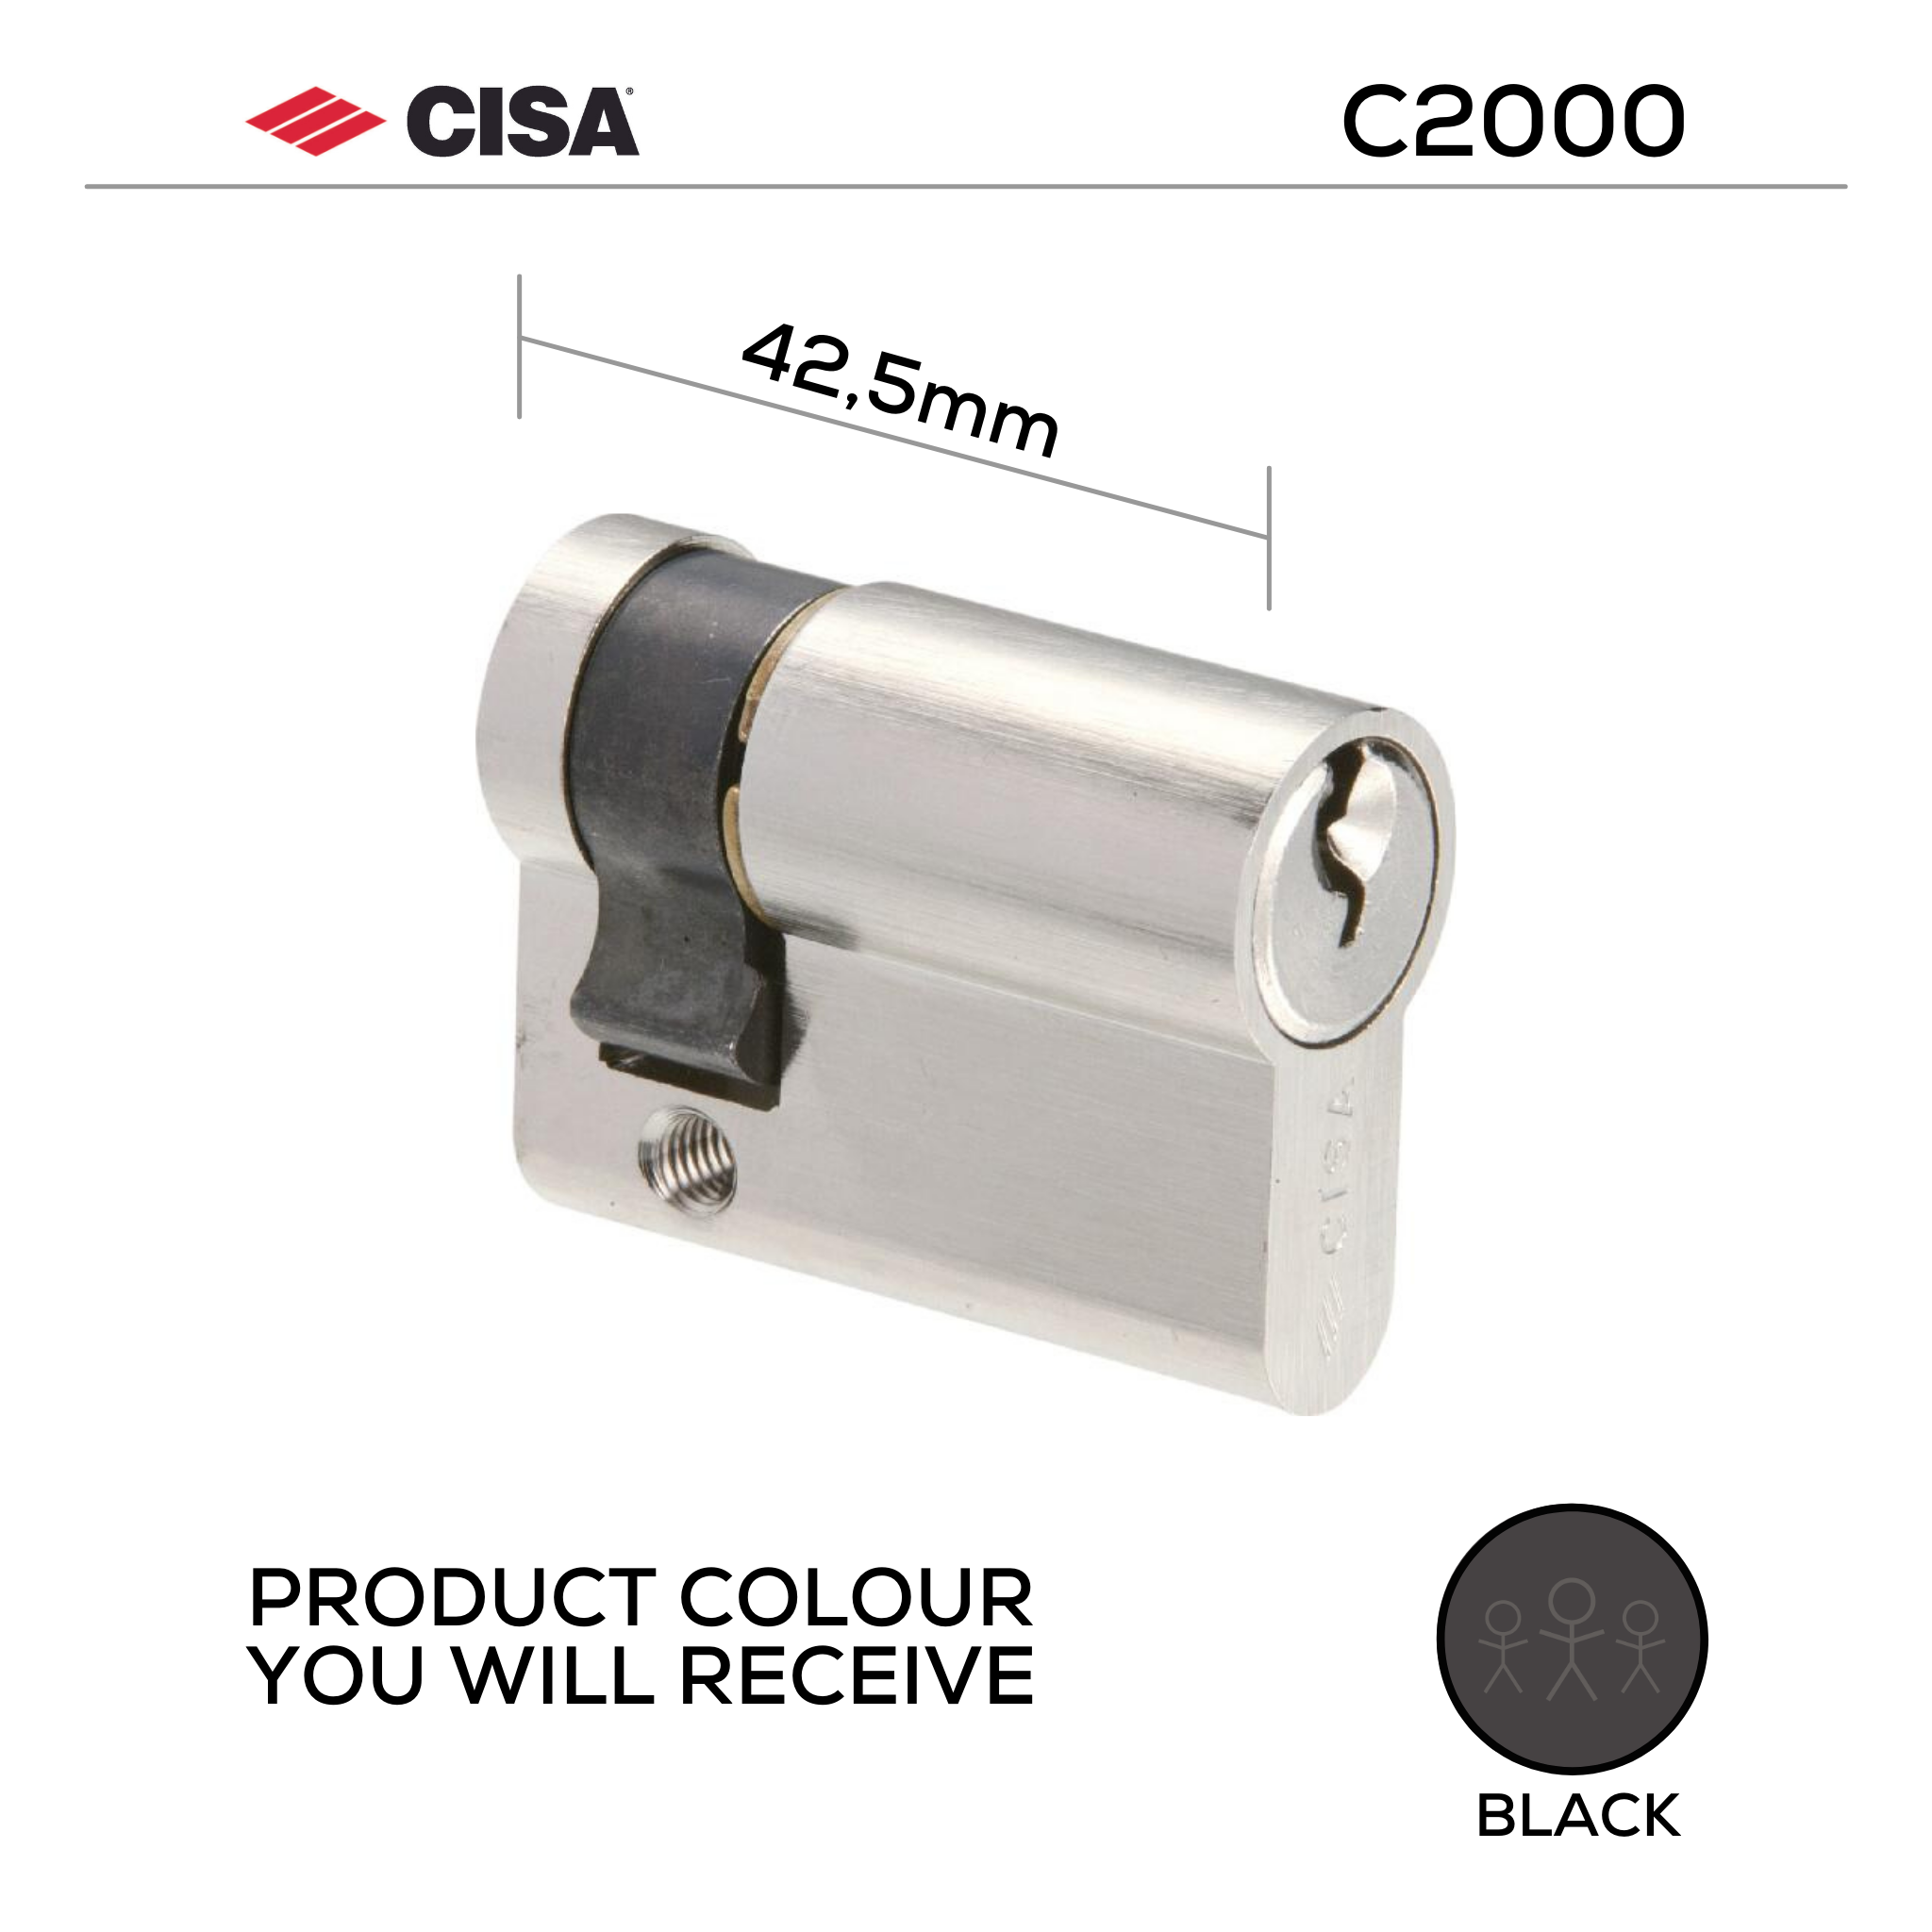 09026-02-00-BLK-KD, 42,5mm - 32.5/10, Oval Half (Single Cylinder), C2000, Key, Keyed to Differ (Standard), Black, CISA